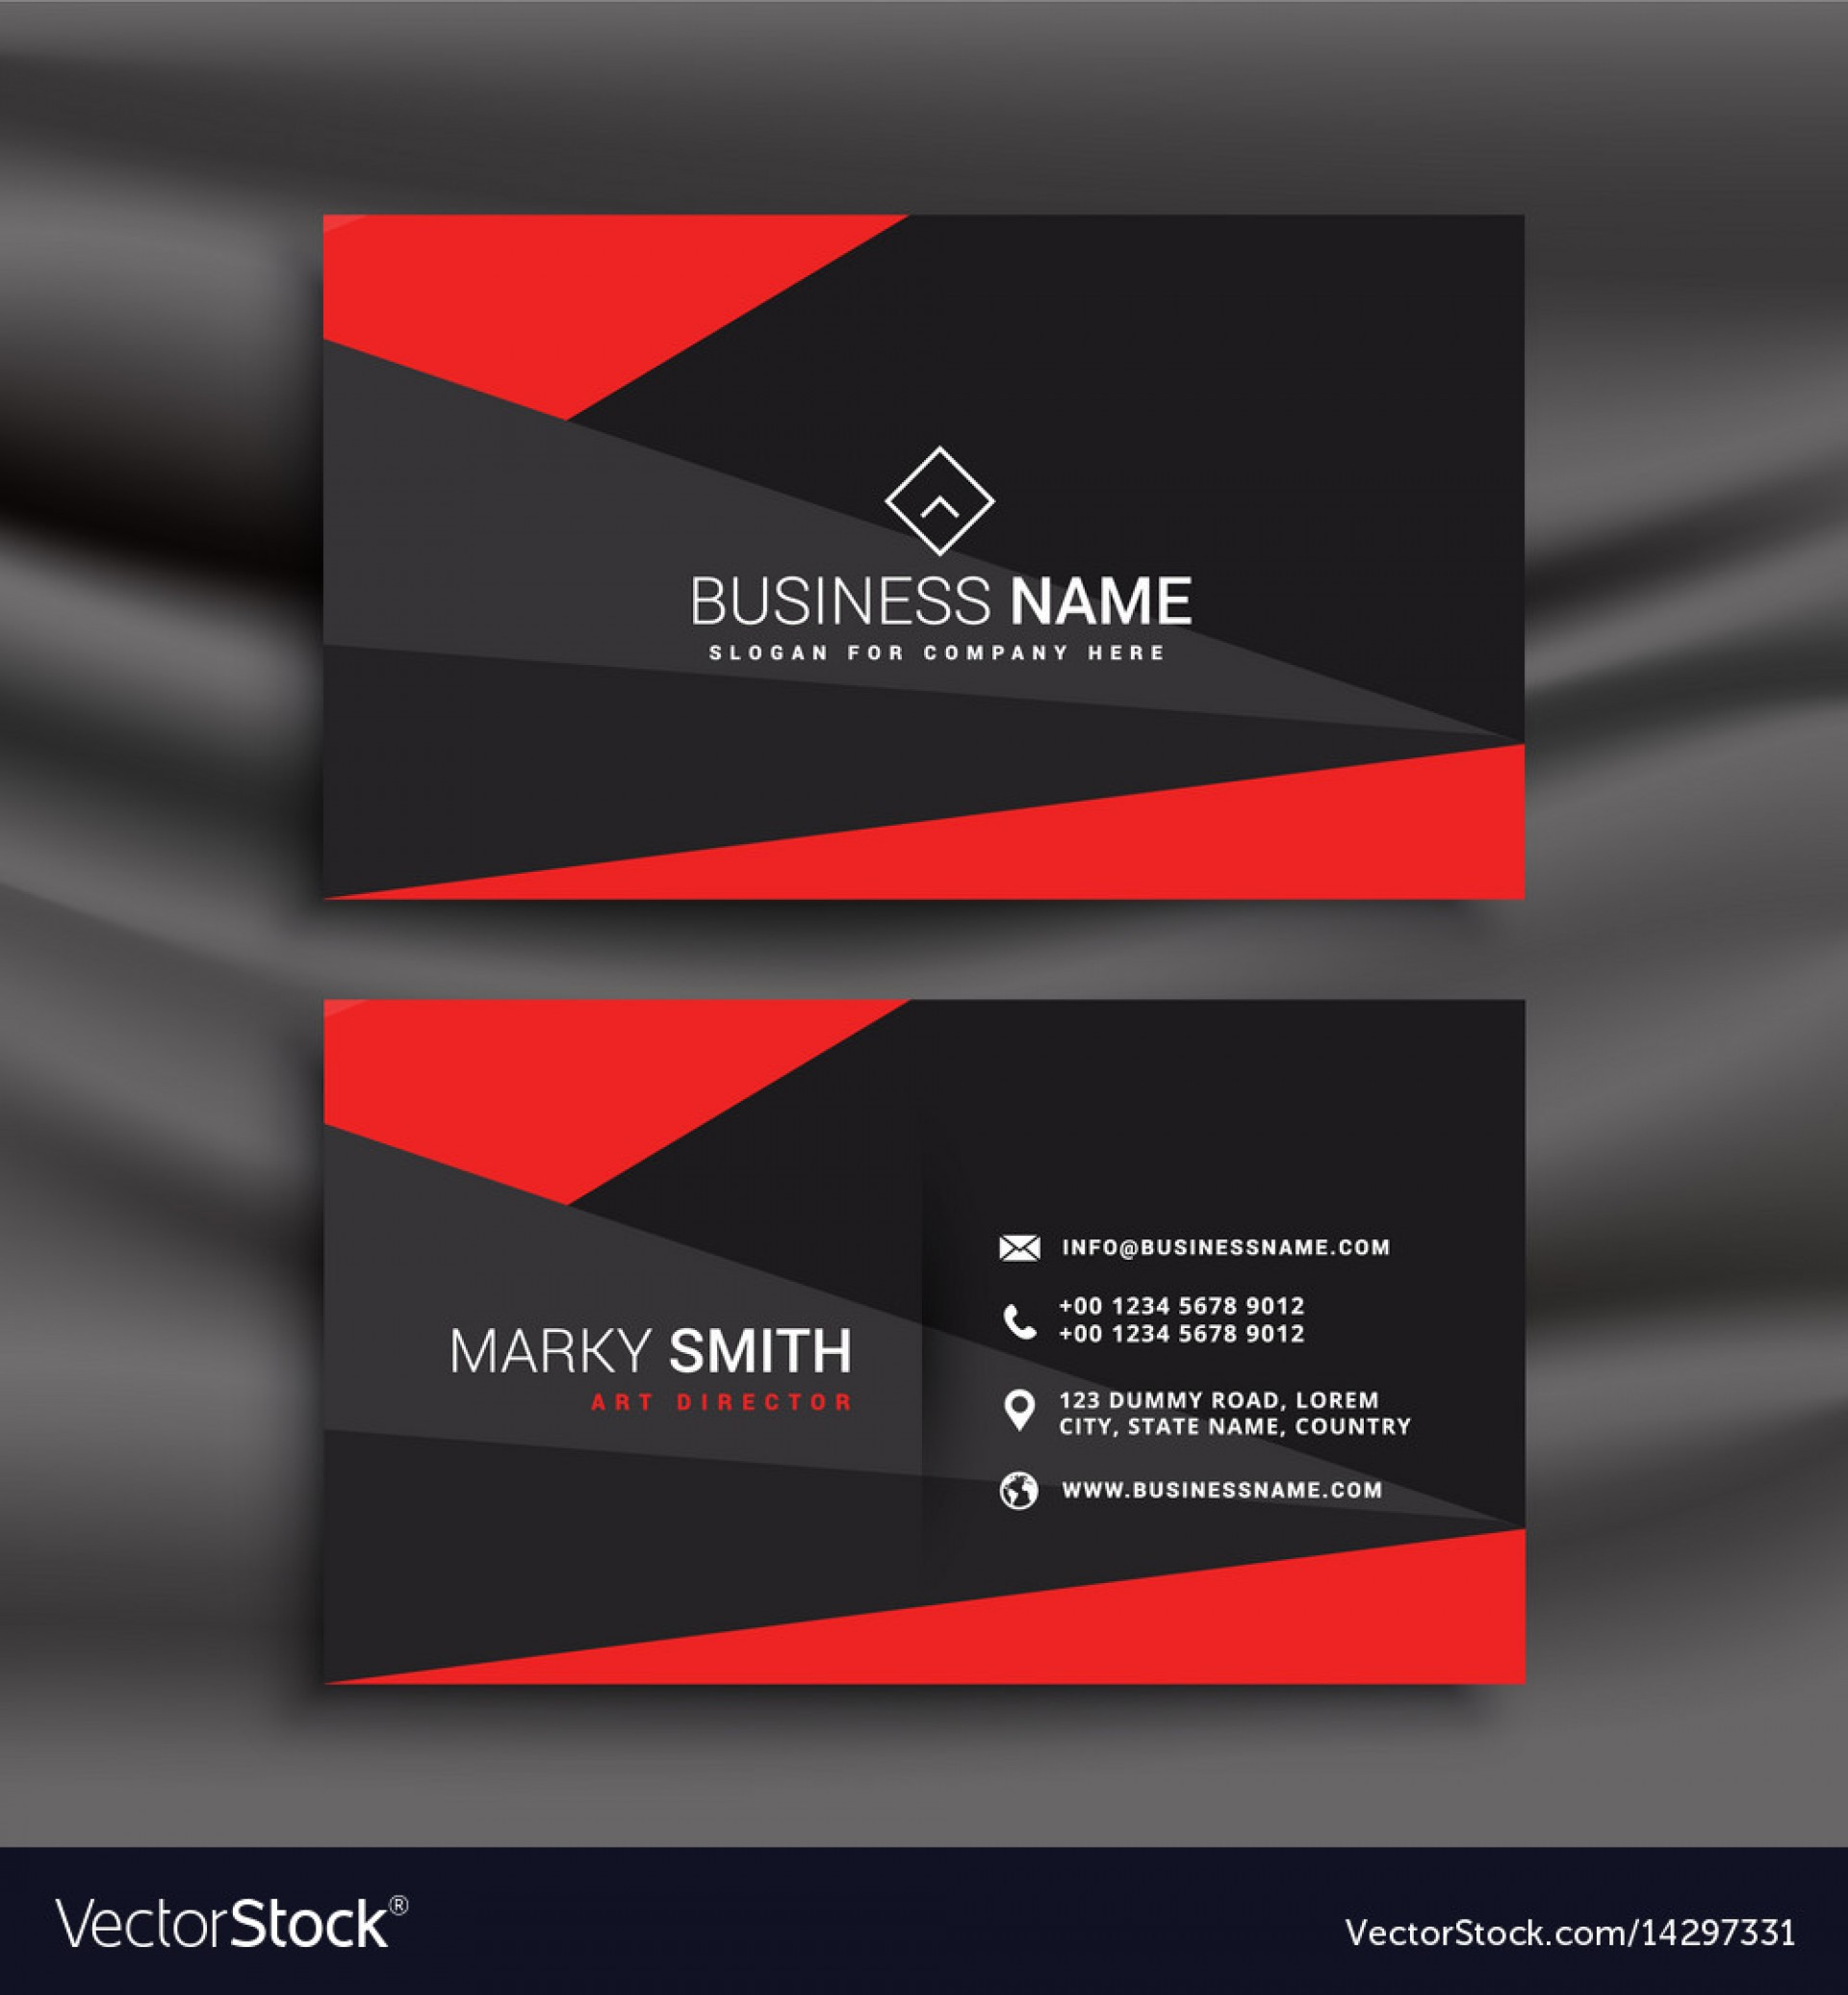 band business card templates free beautiful 017 psd black and red business card template with vector ideas of band business card templates free